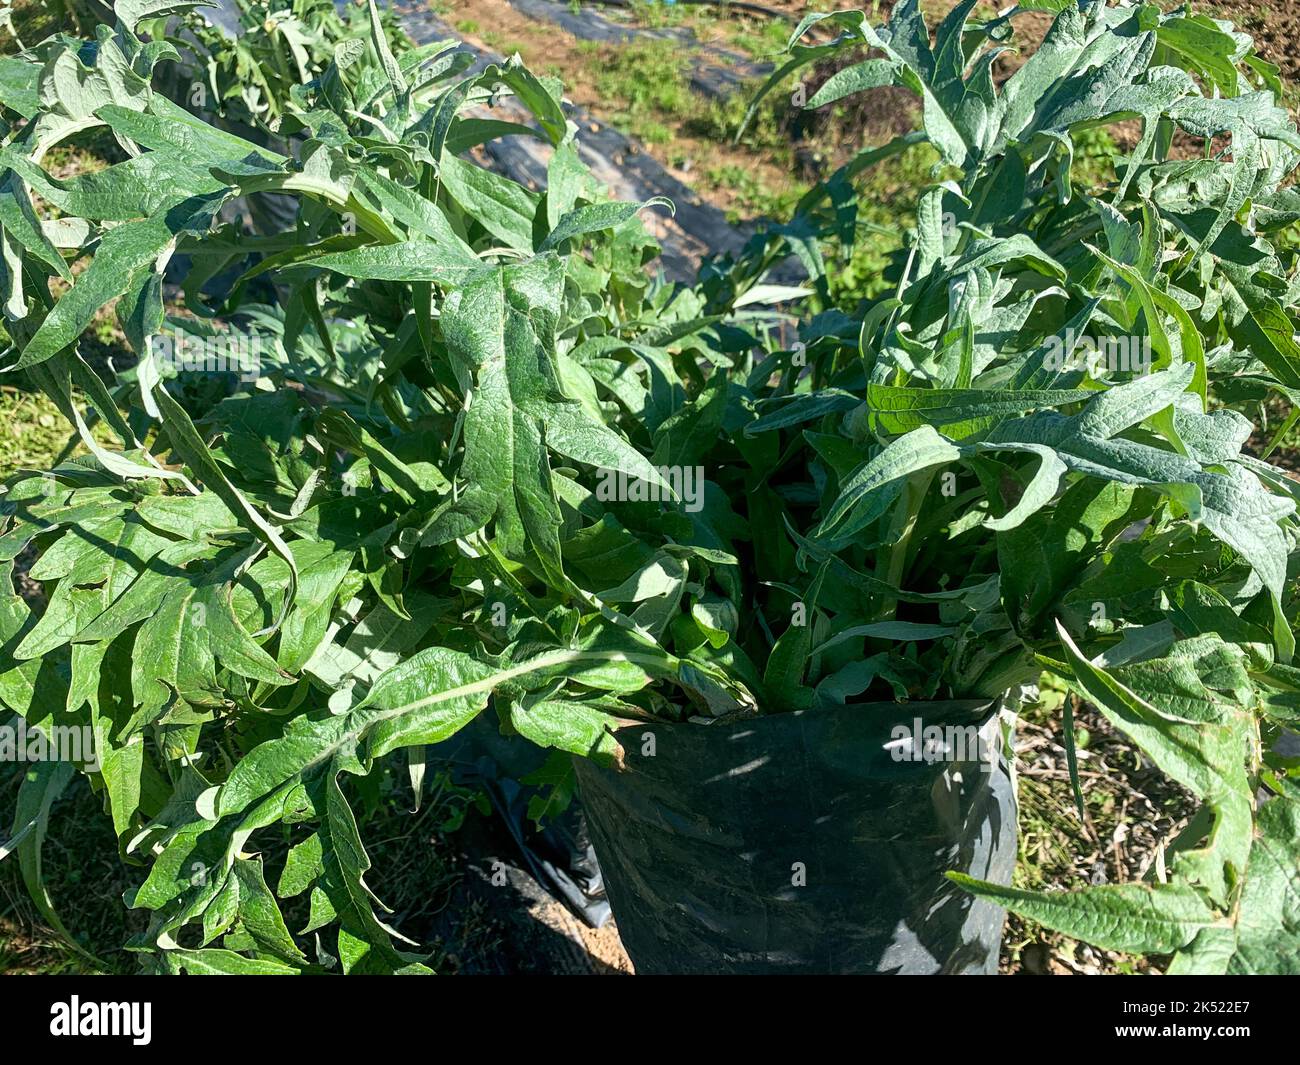 Organic vegetable cultivation, cardoons, Saint-Priest, Rhone, Auvergne Rhone-Alps region, France Stock Photo